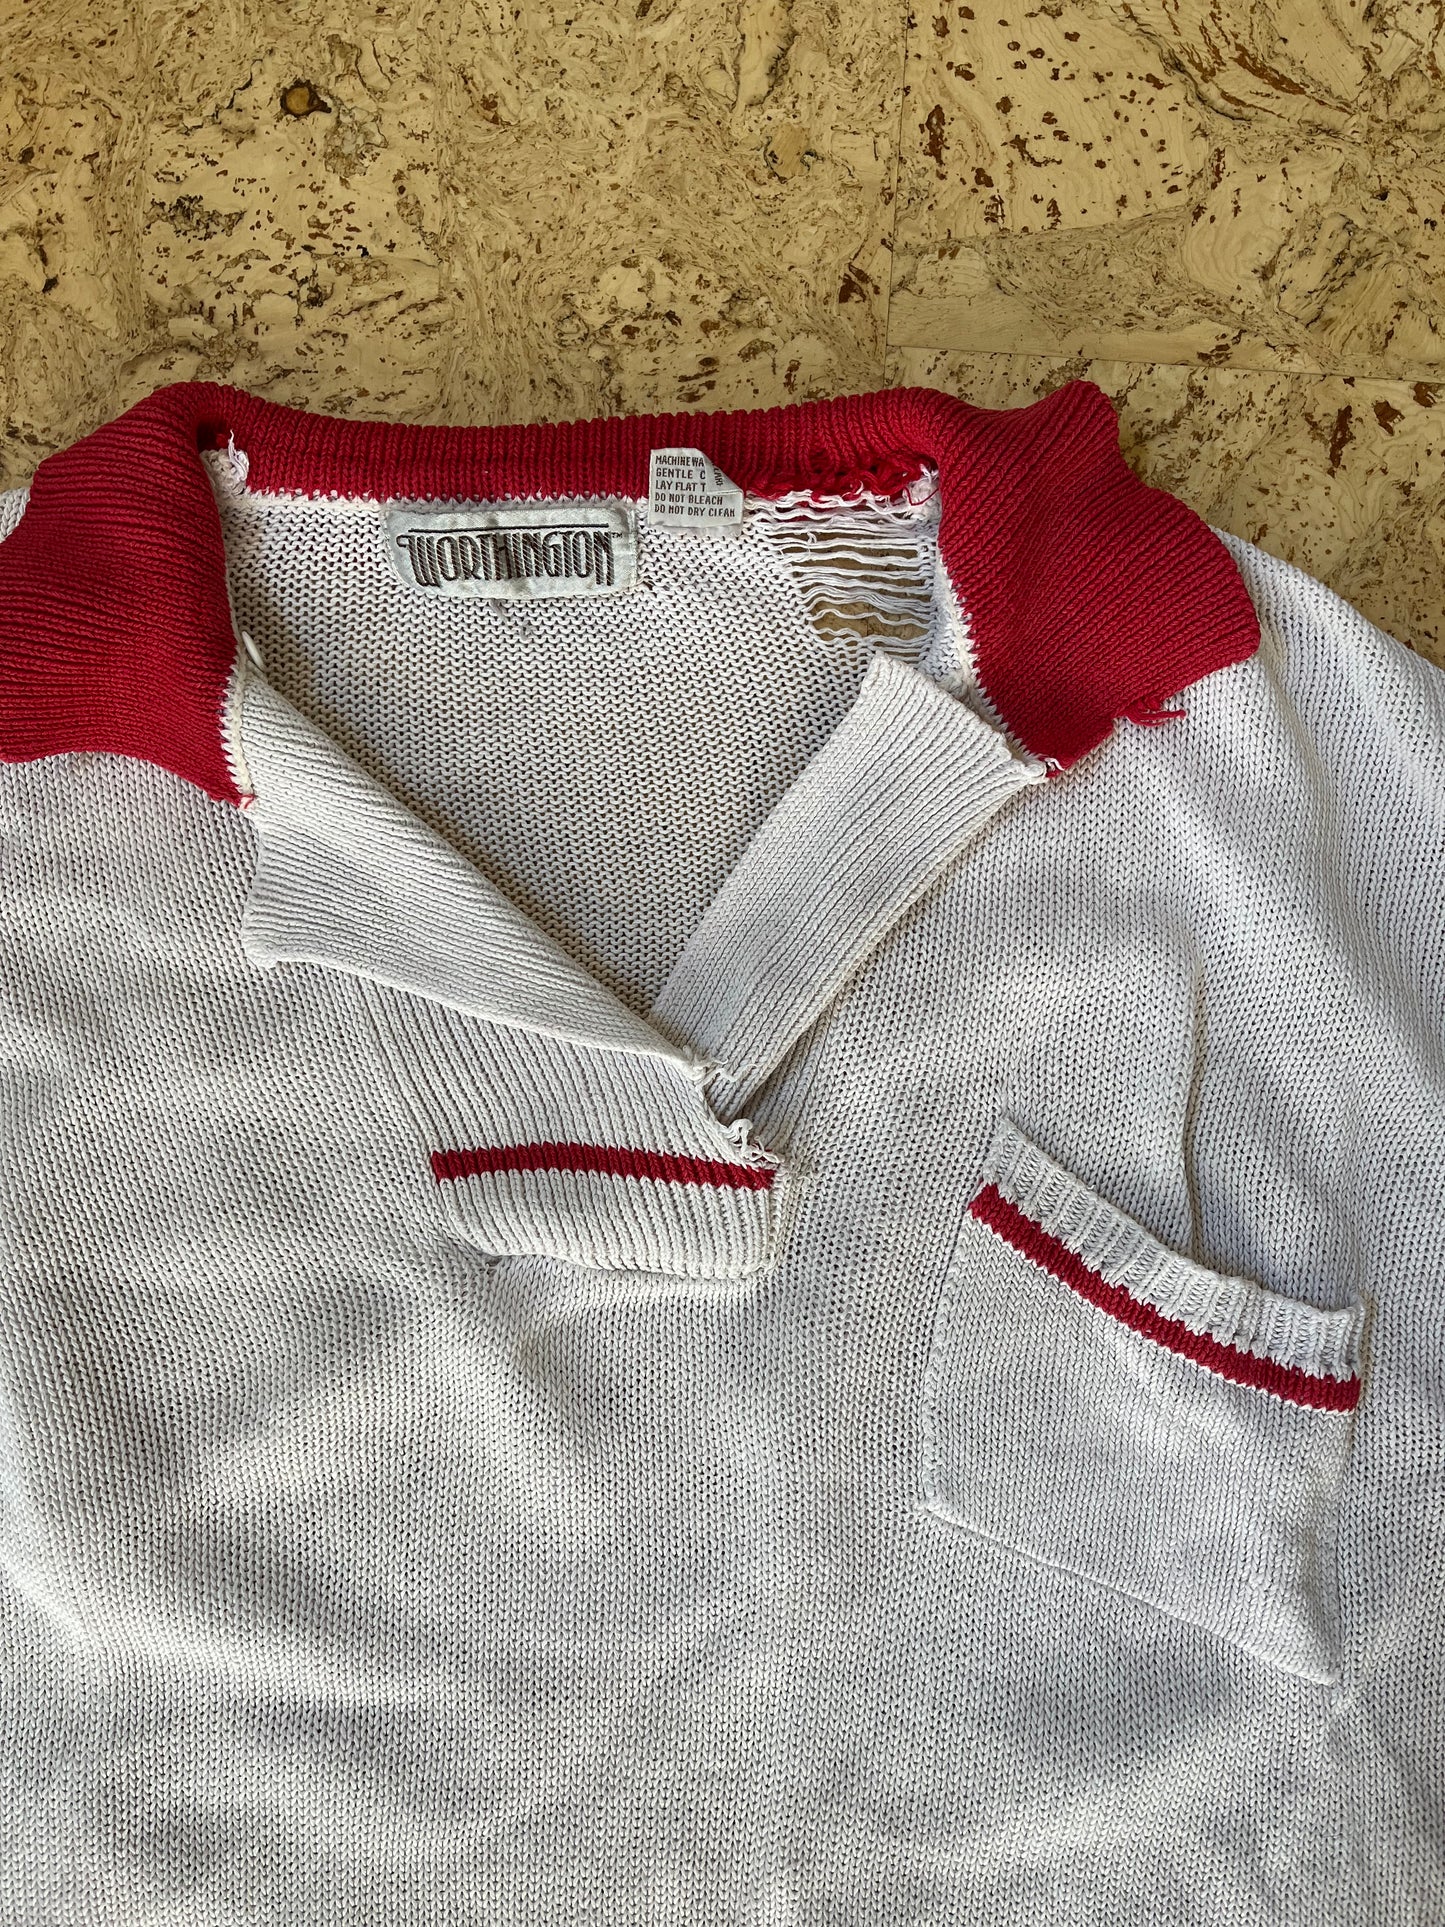 Vintage Distressed Worthington Knit Bowling Shirt